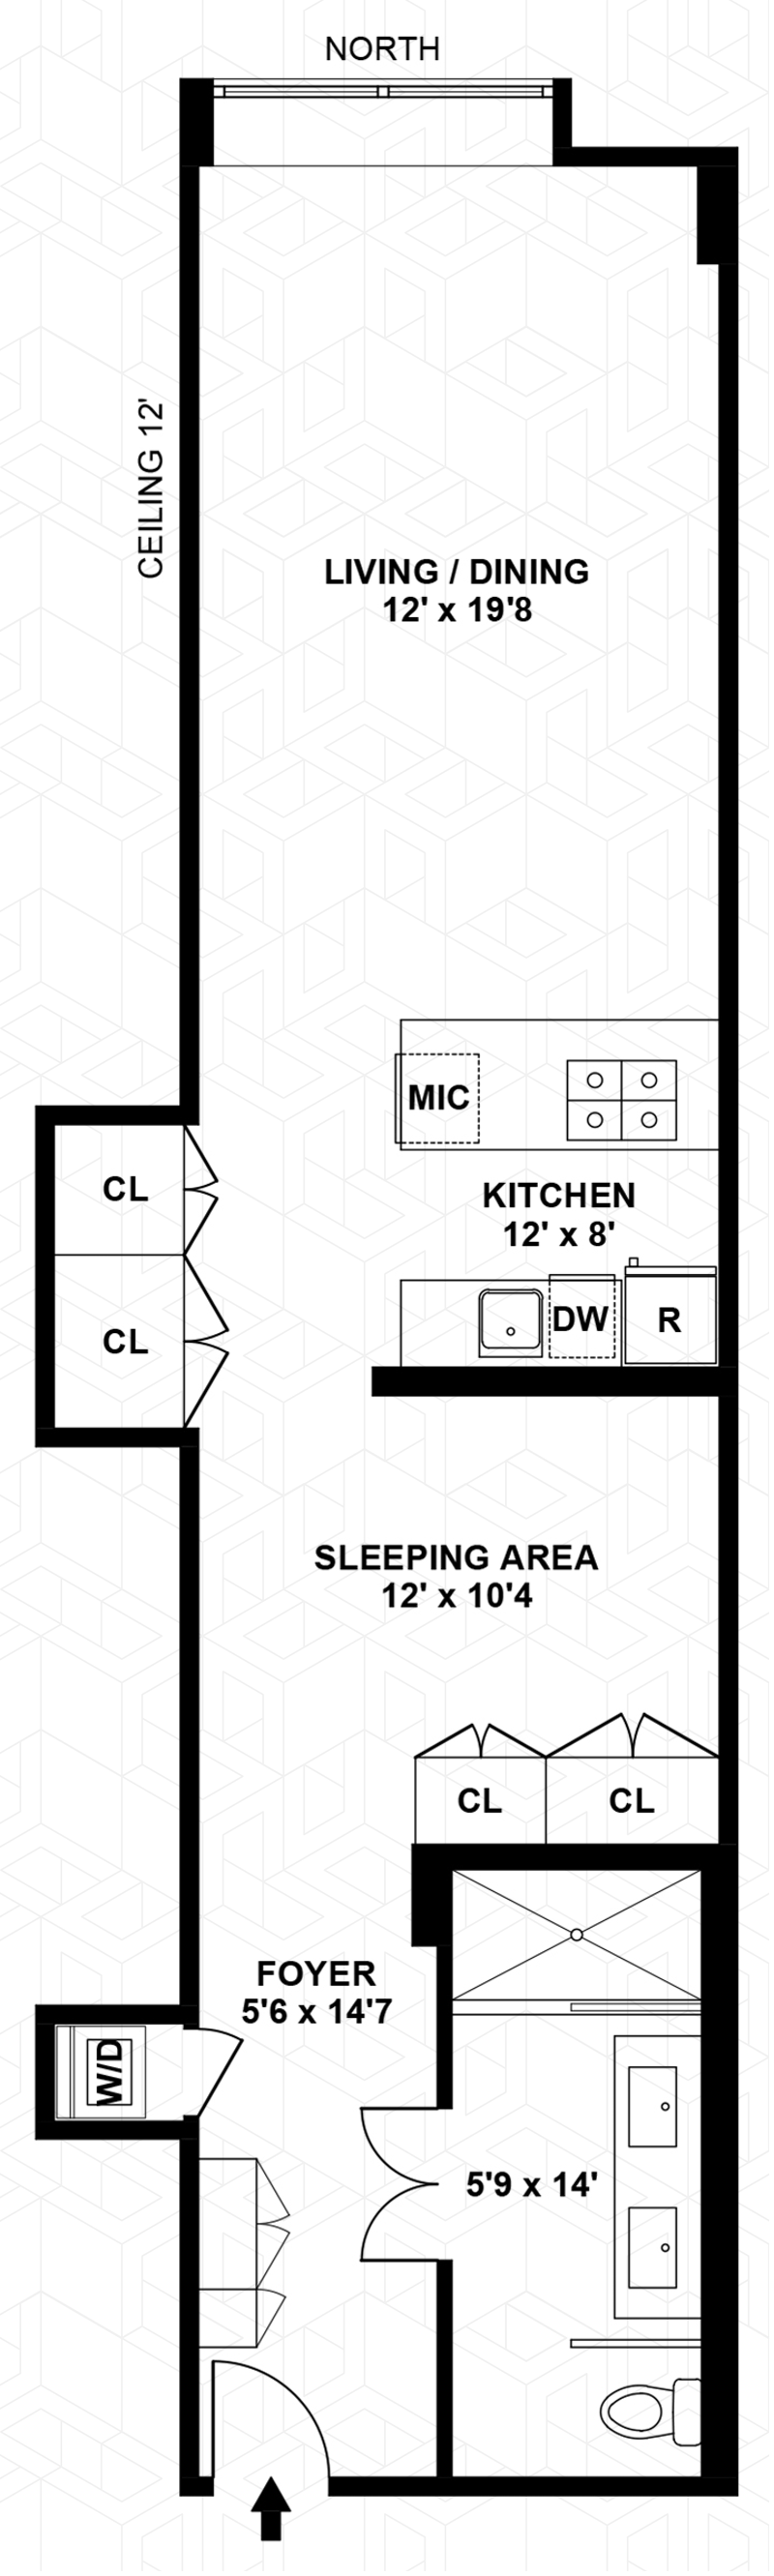 Floorplan for 111 Fulton Street, 810